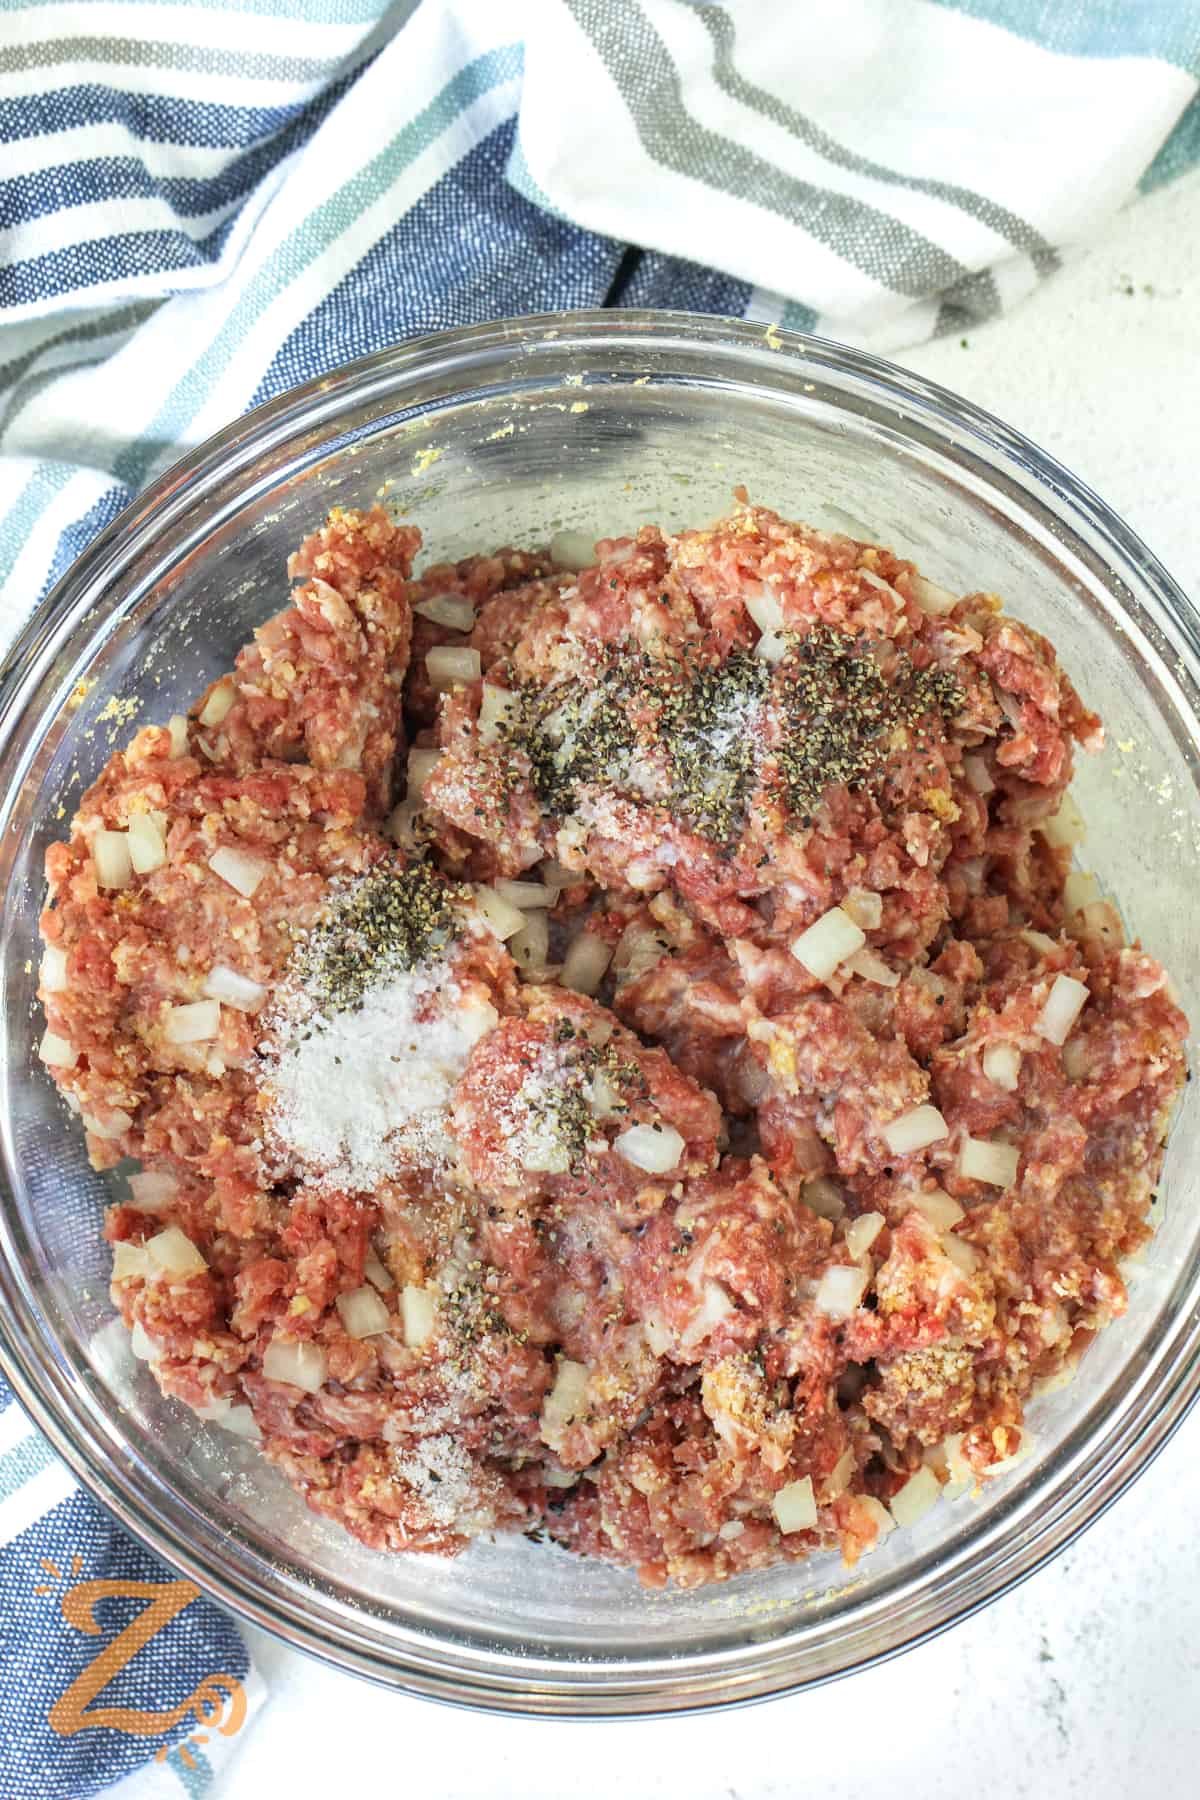 adding seasonings to meat to make Swedish Meatballs